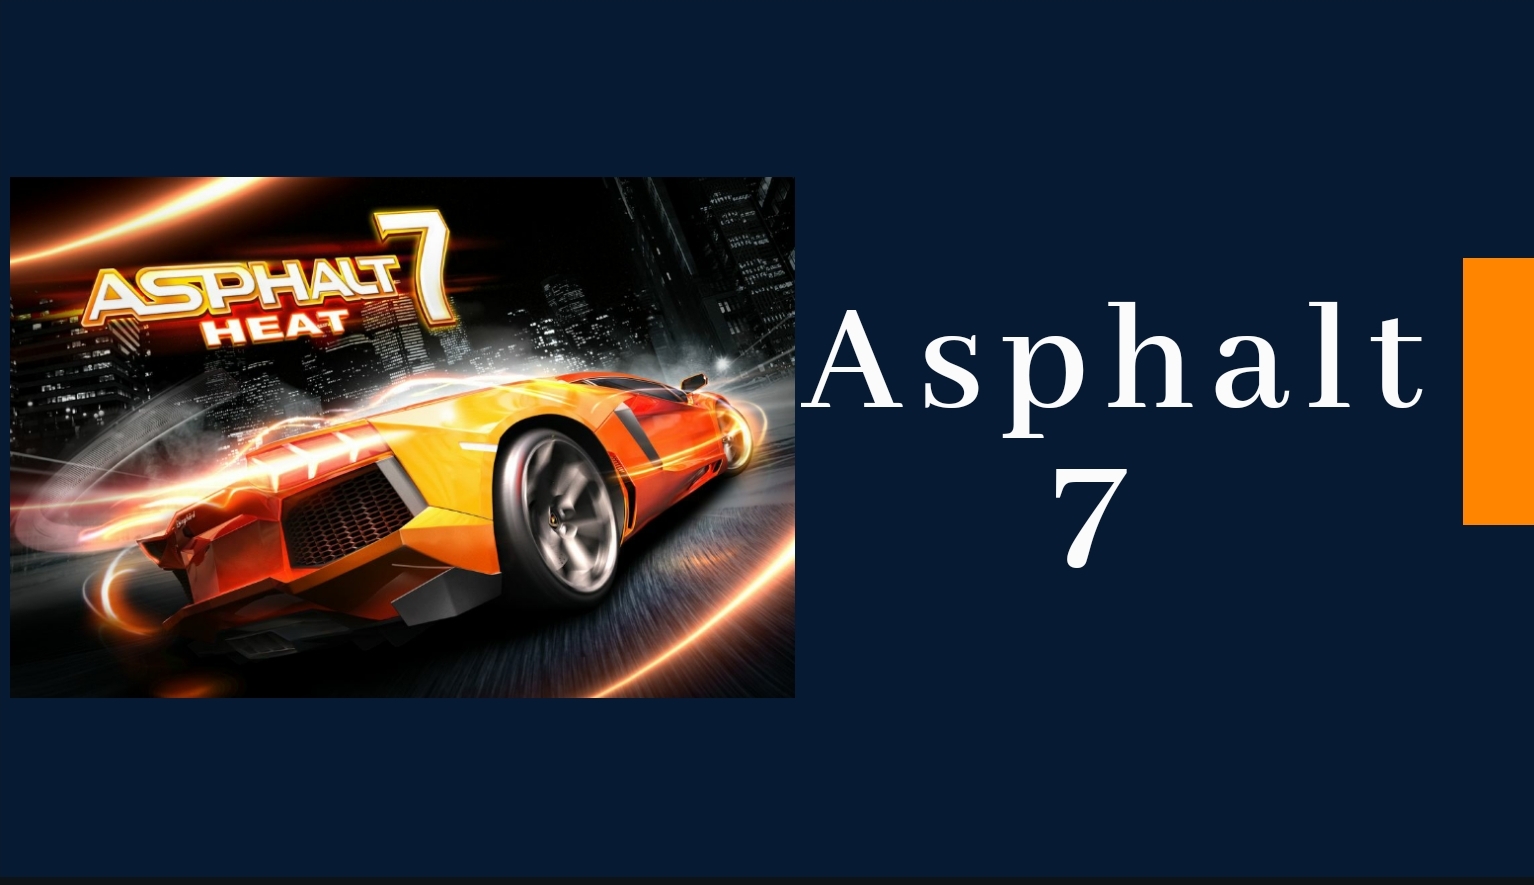 asphalt 7 heat download zippyshare